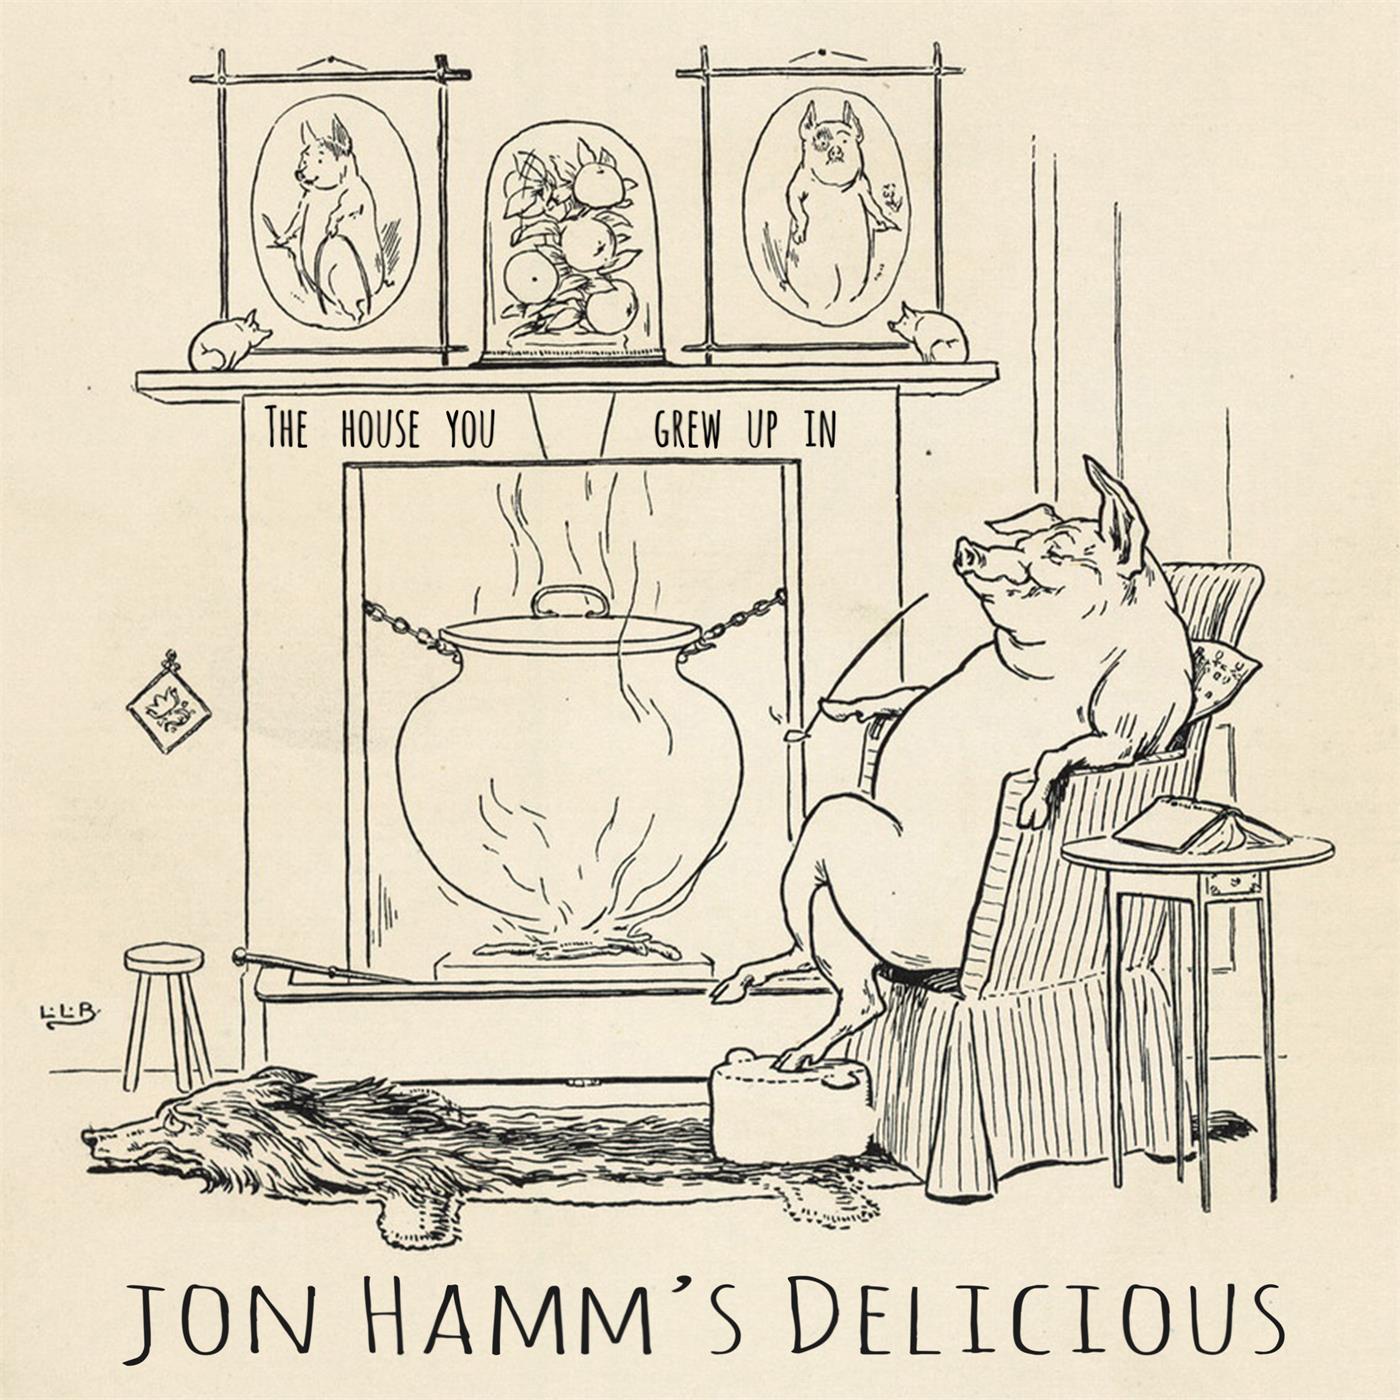 Jon Hamm's Delicious